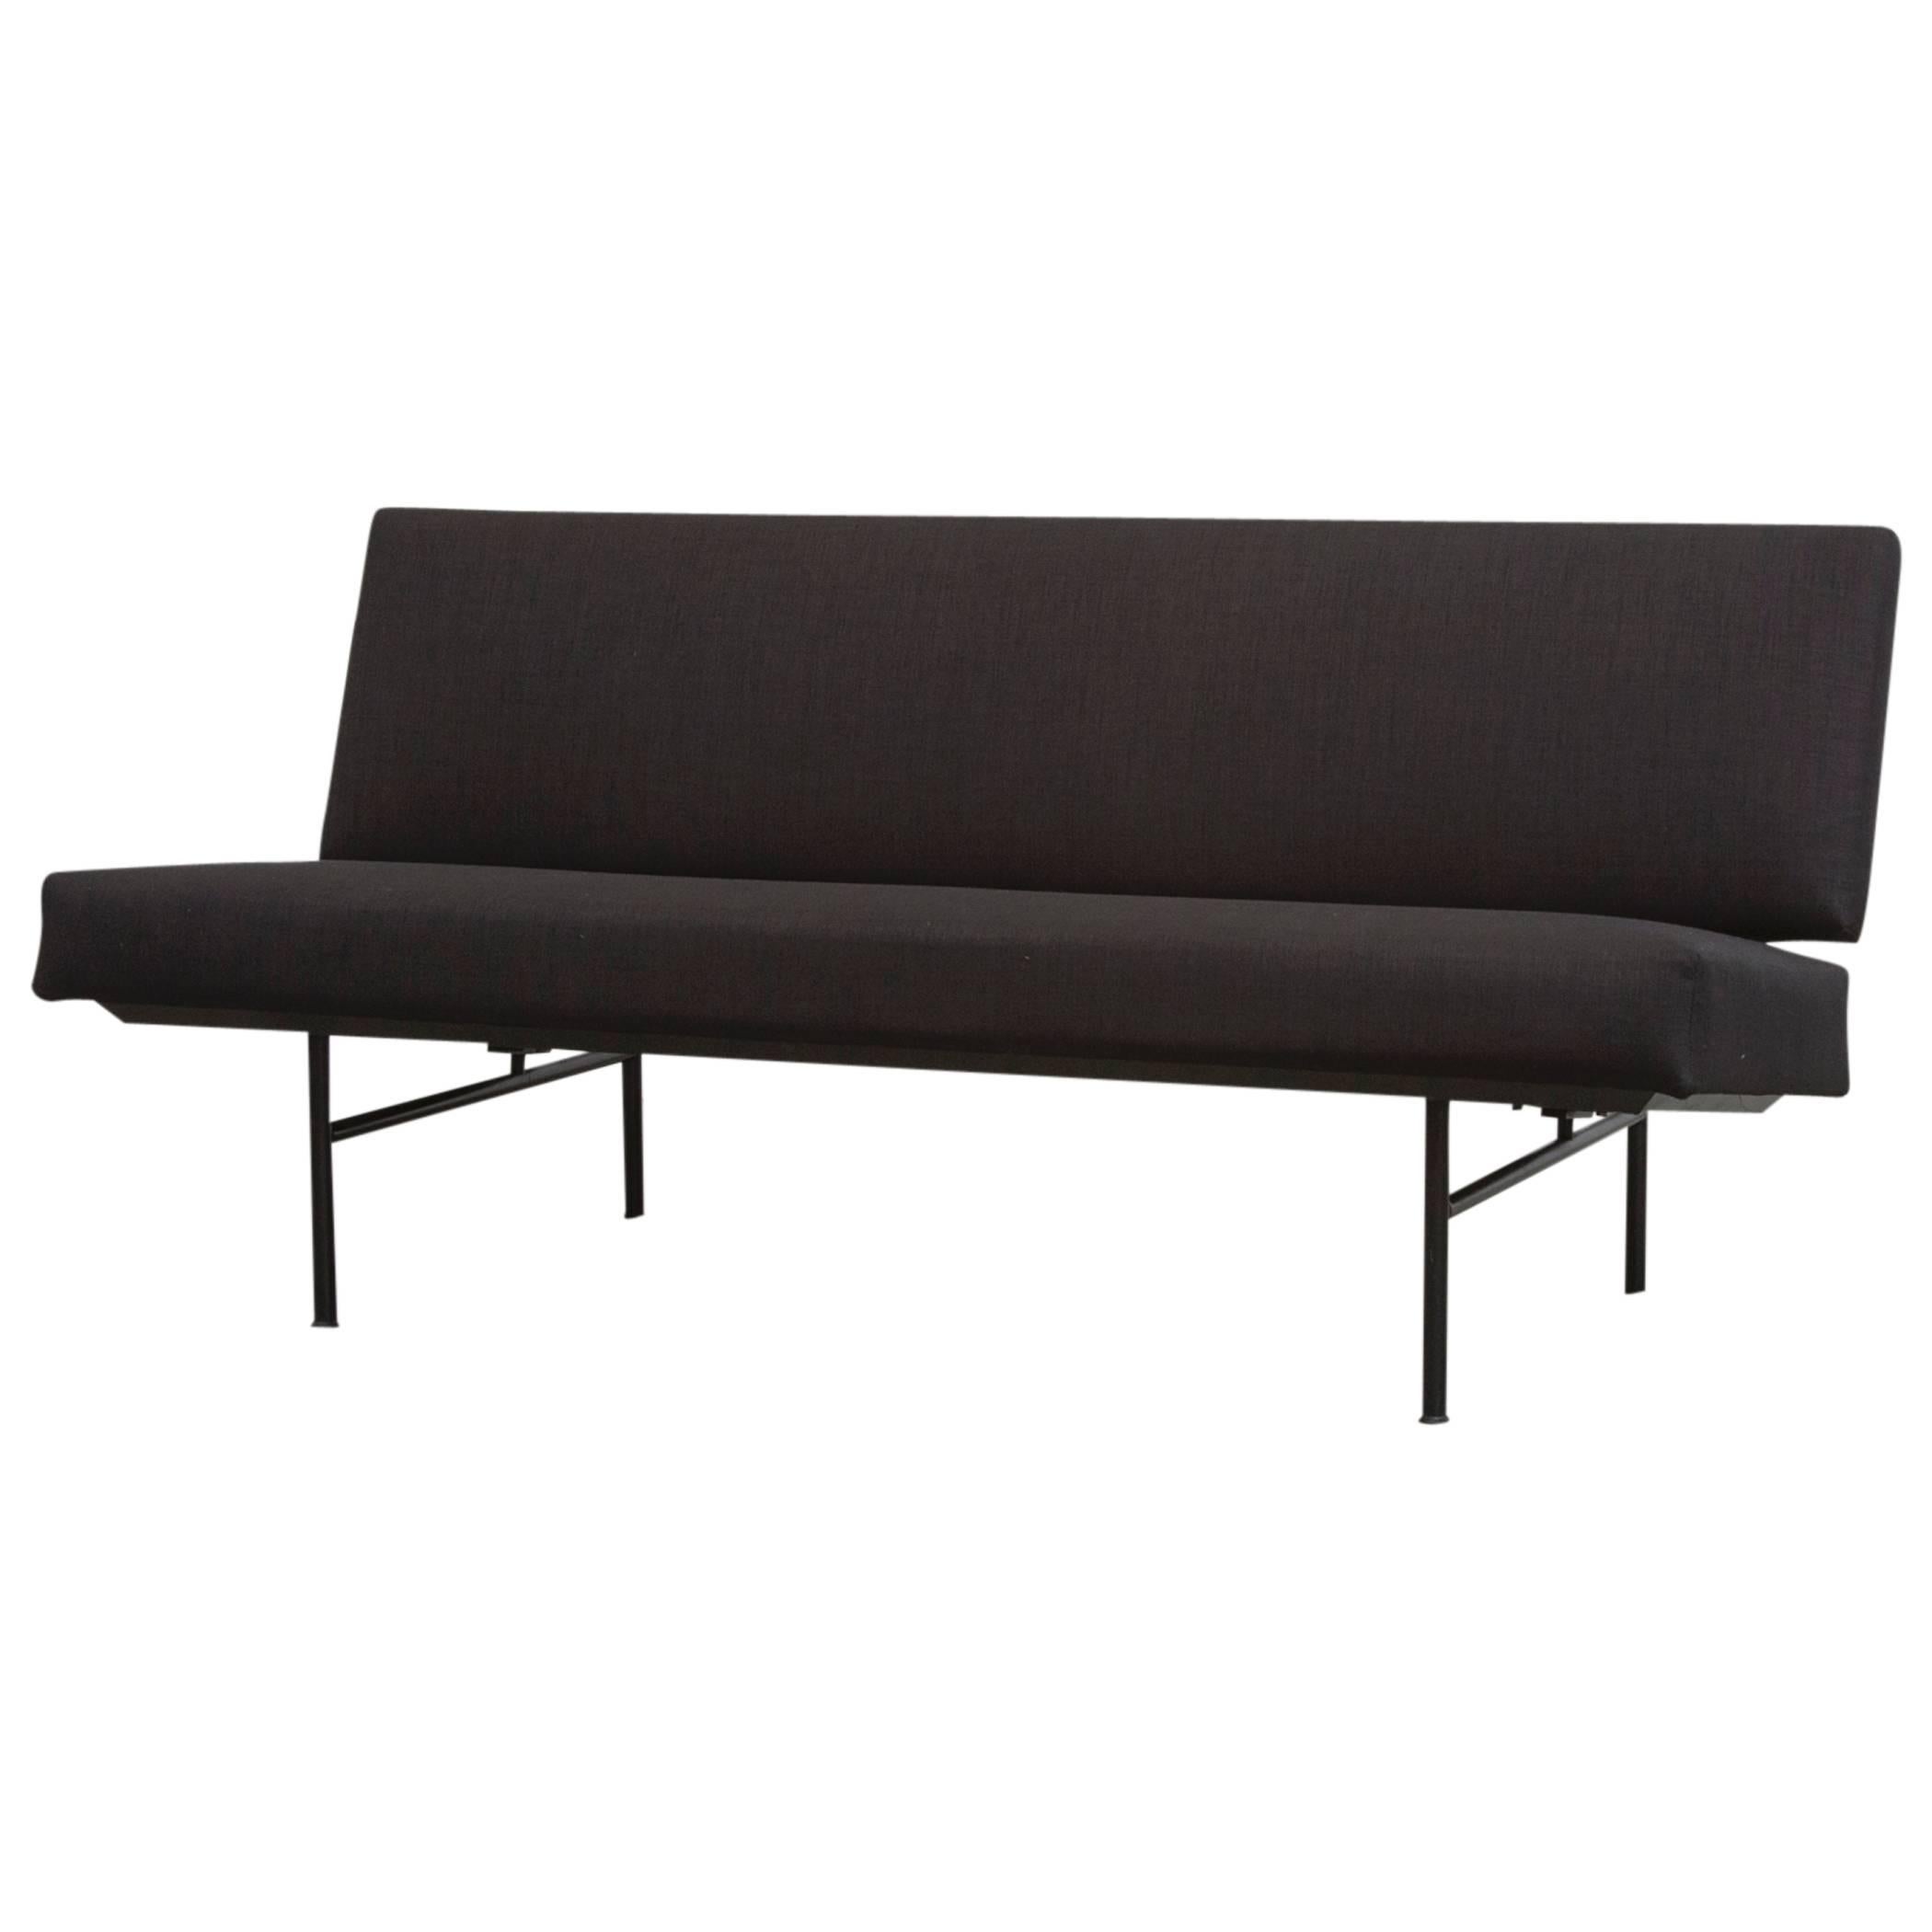 Coen de Vries Attributed to Black Streamline Sofa